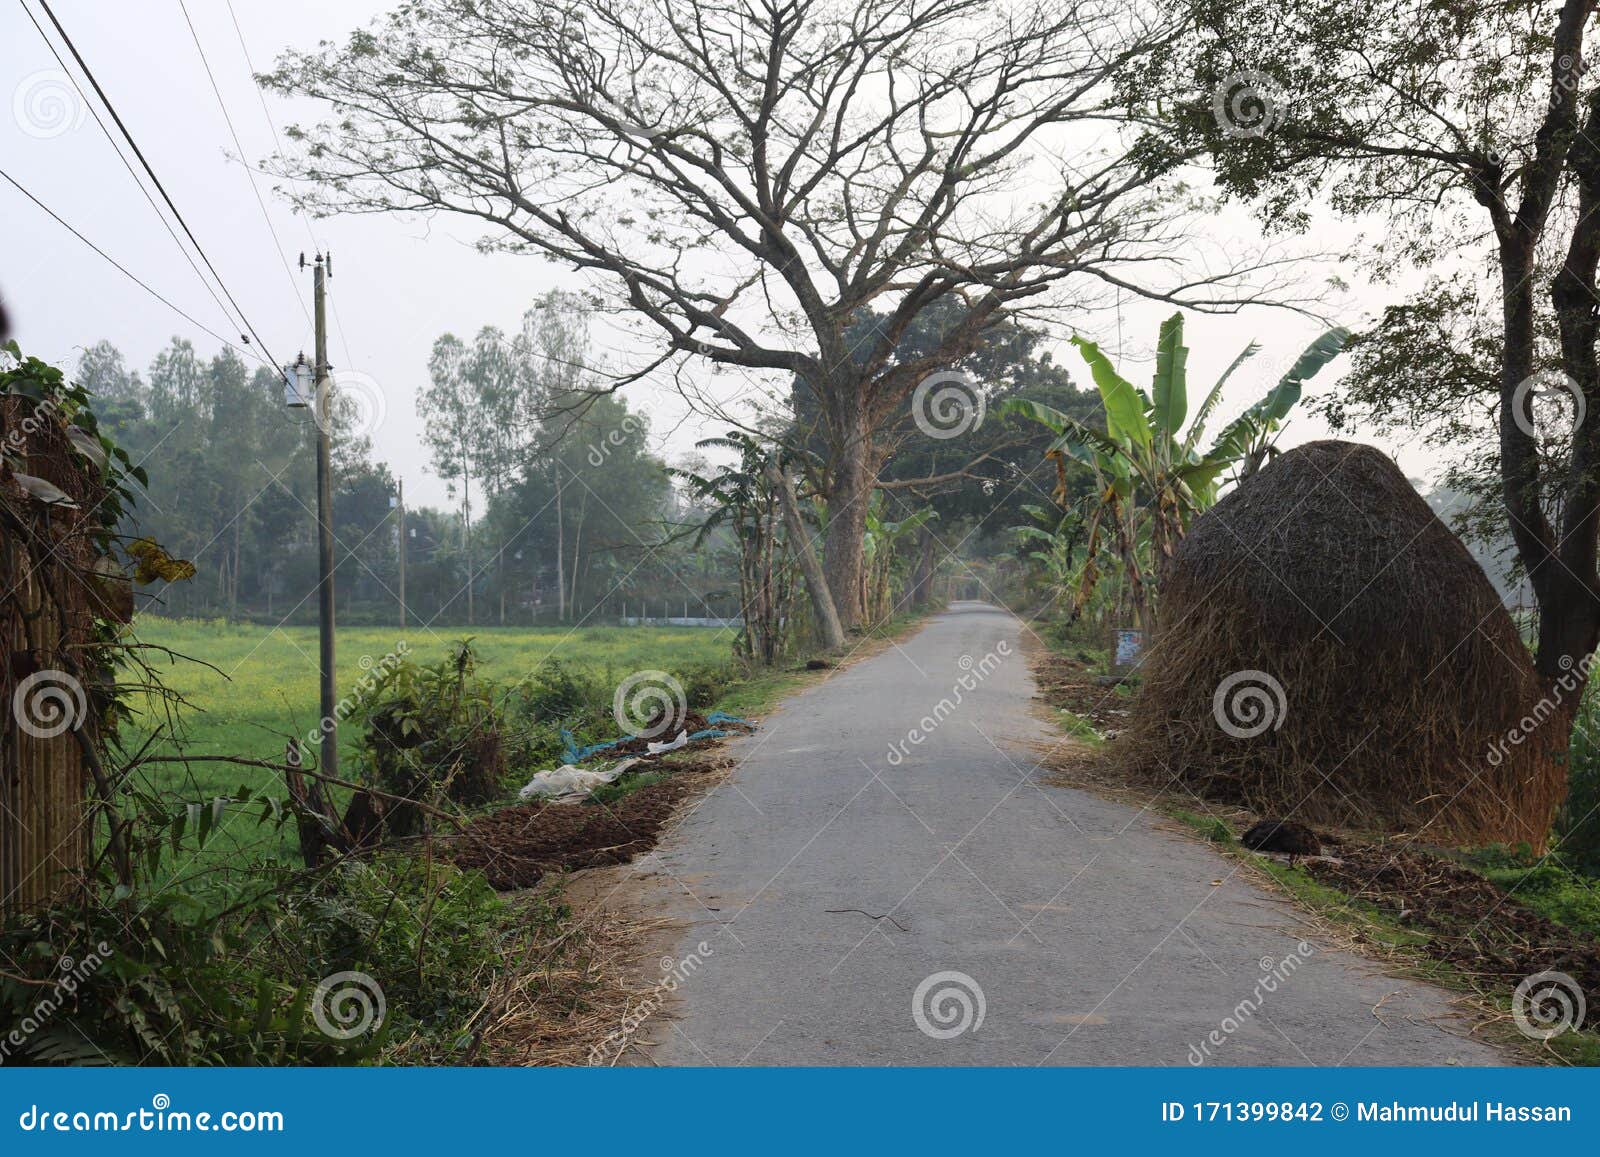 Village Road Beautiful Village Road In Bangladesh Stock Photo Image